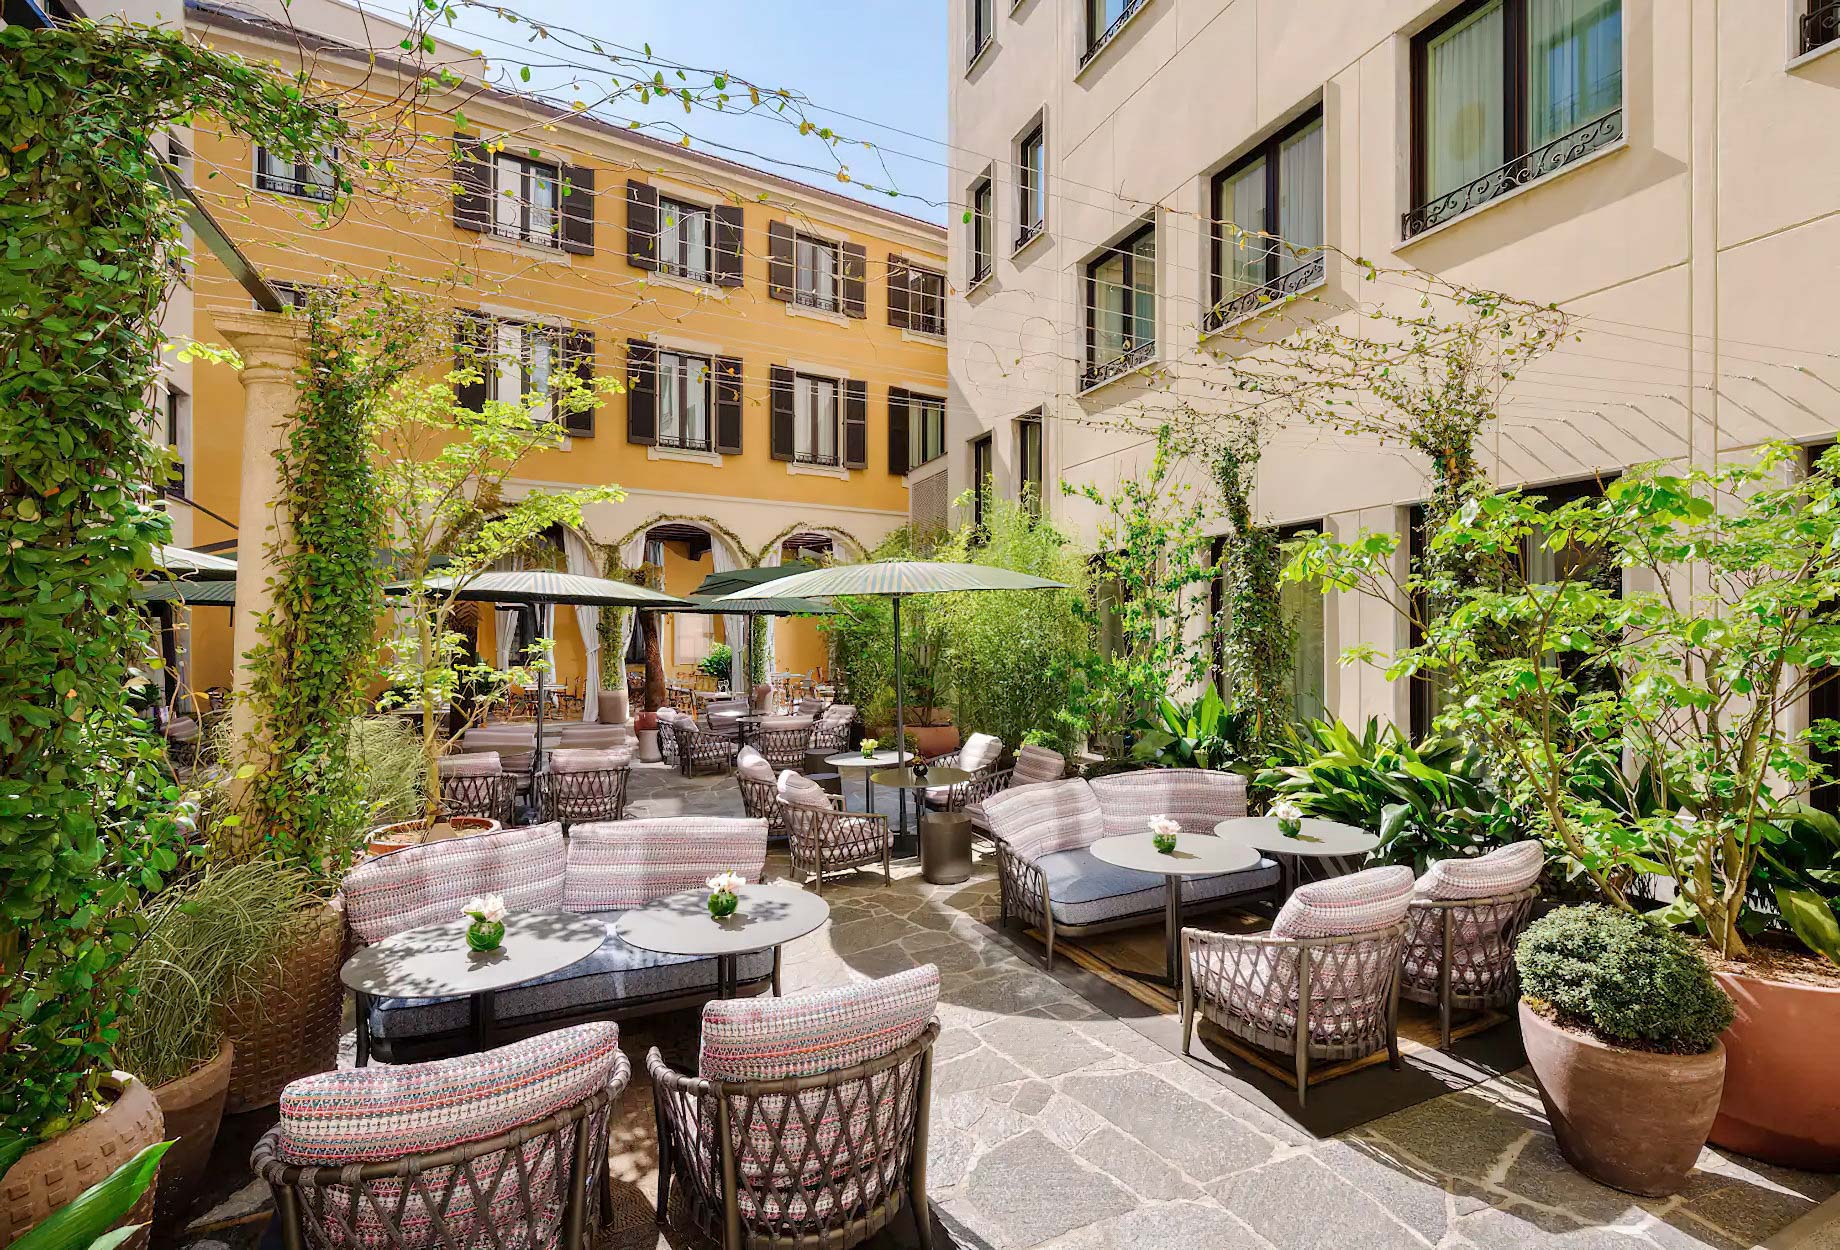 Mandarin Oriental, Milan Hotel – Milan, Italy – Mandarin Garden Restaurant Courtyard